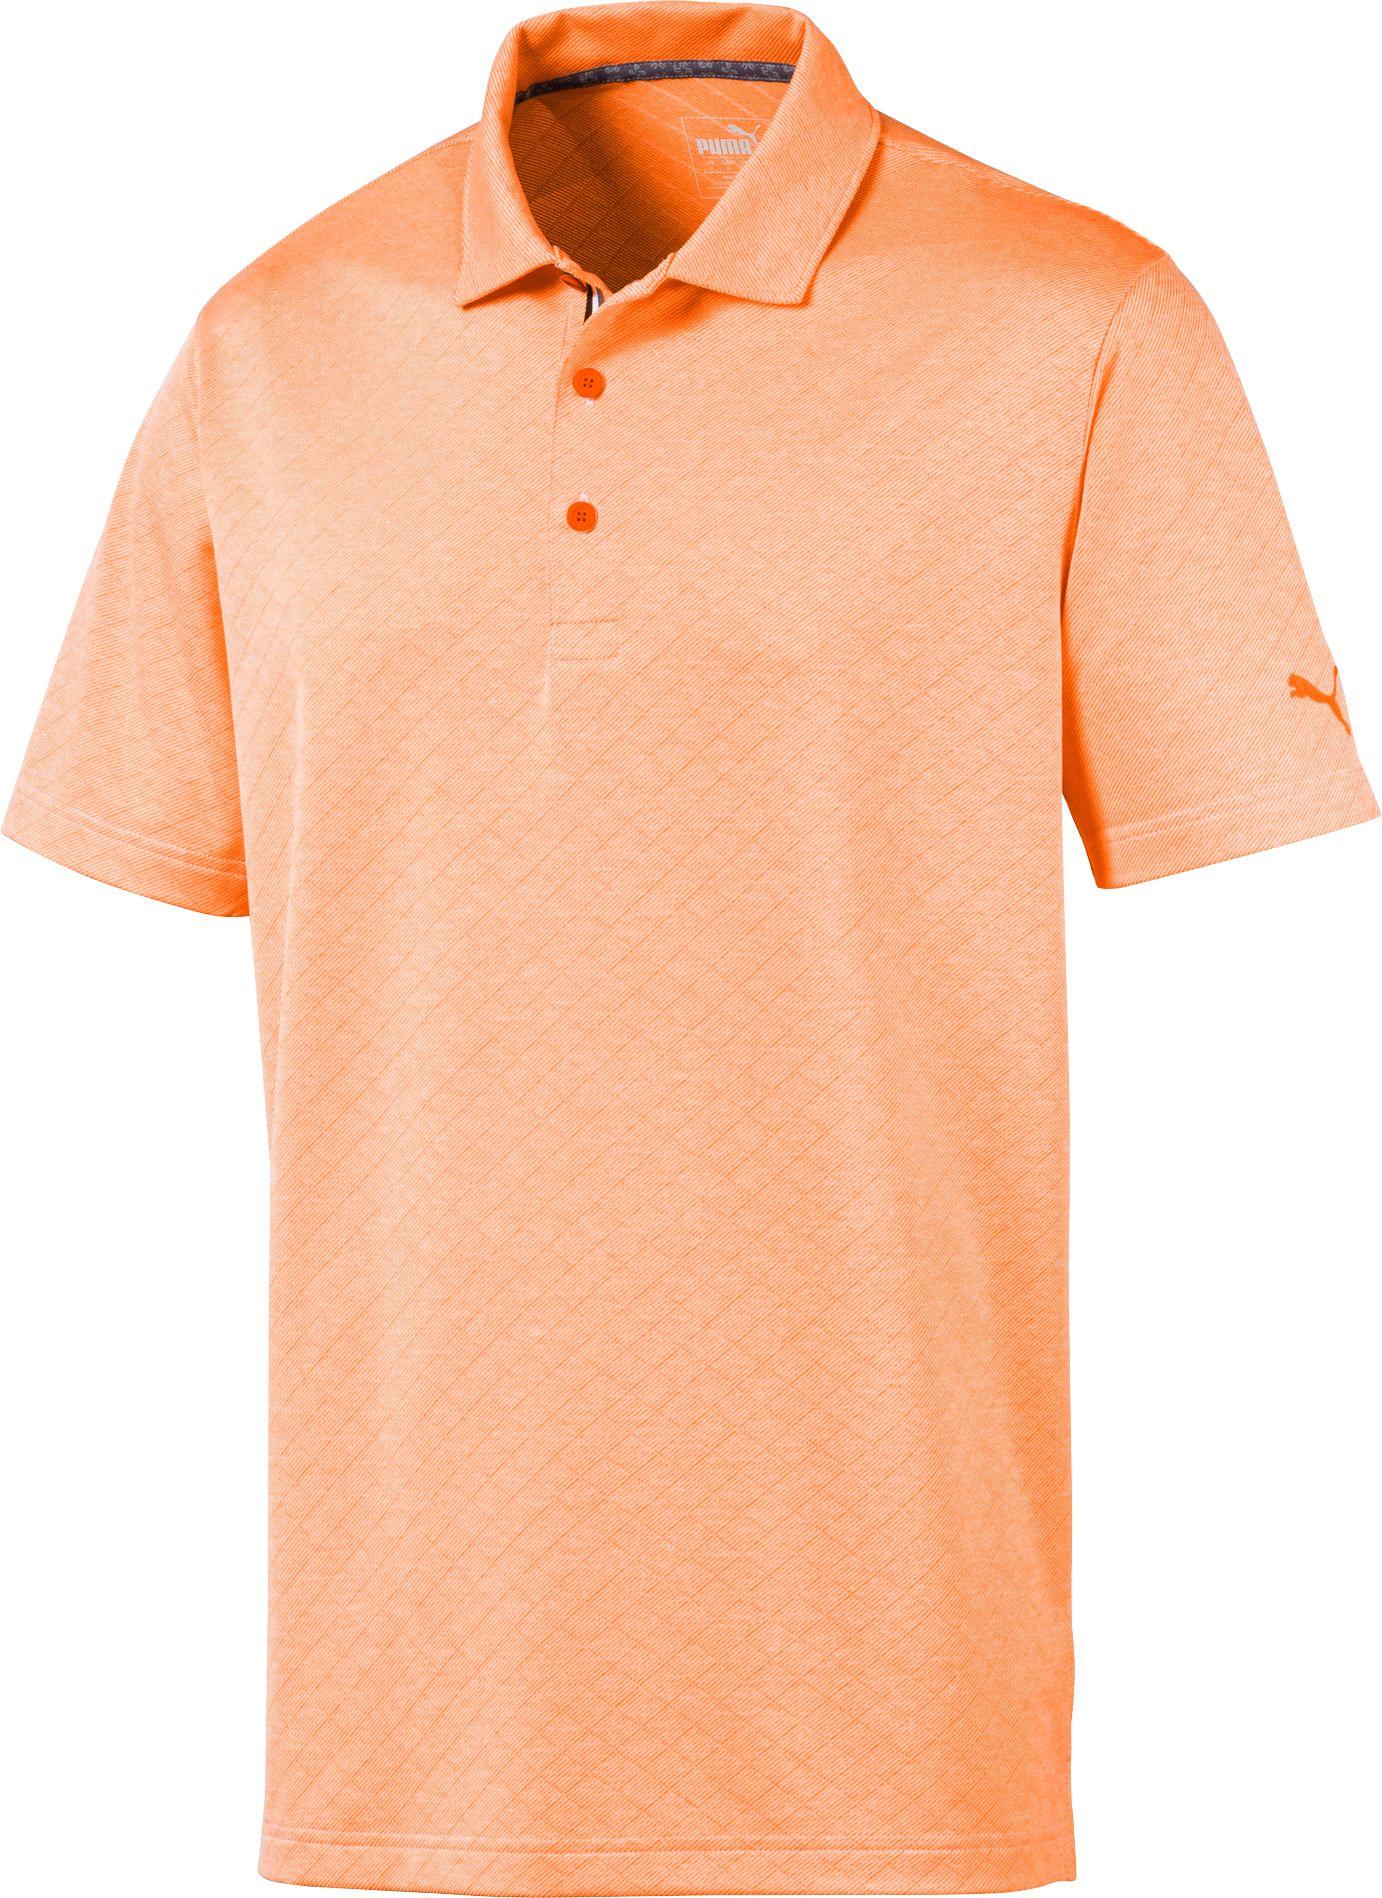 PUMA Field Golf Polo in Orange for Men - Lyst